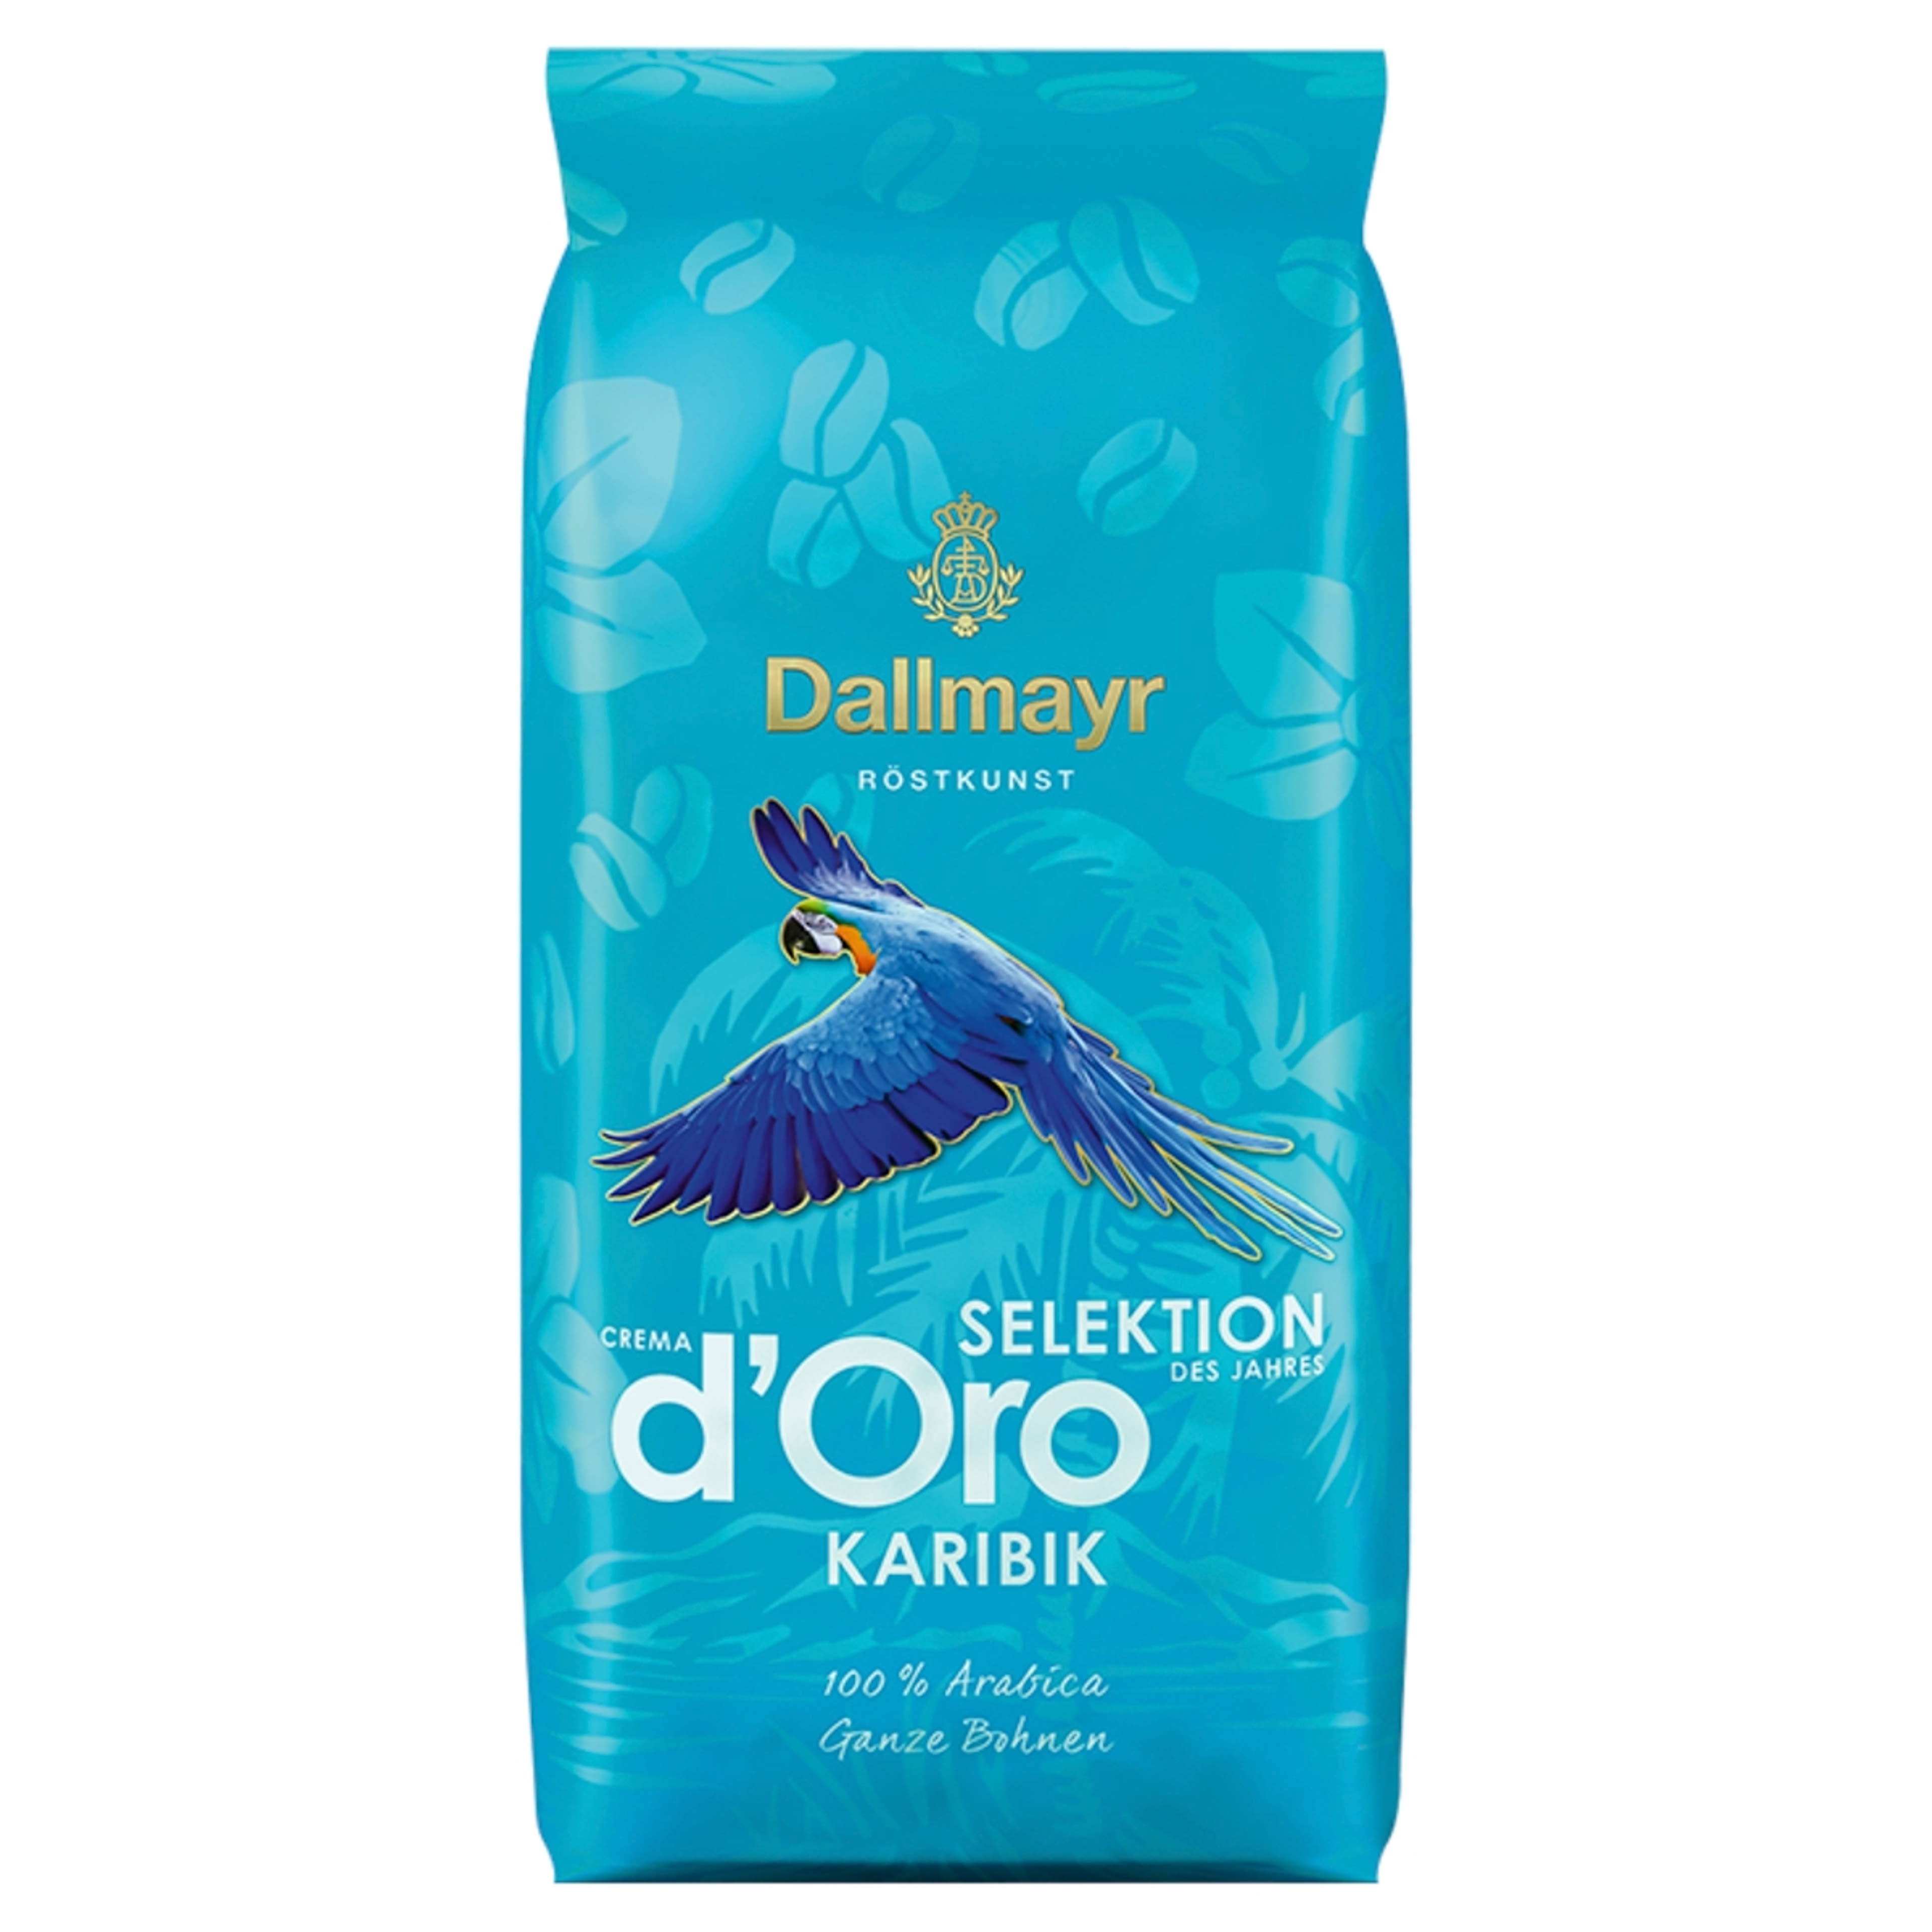 Dallmary Creama Dora Selektion szemes kávé - 1000 g